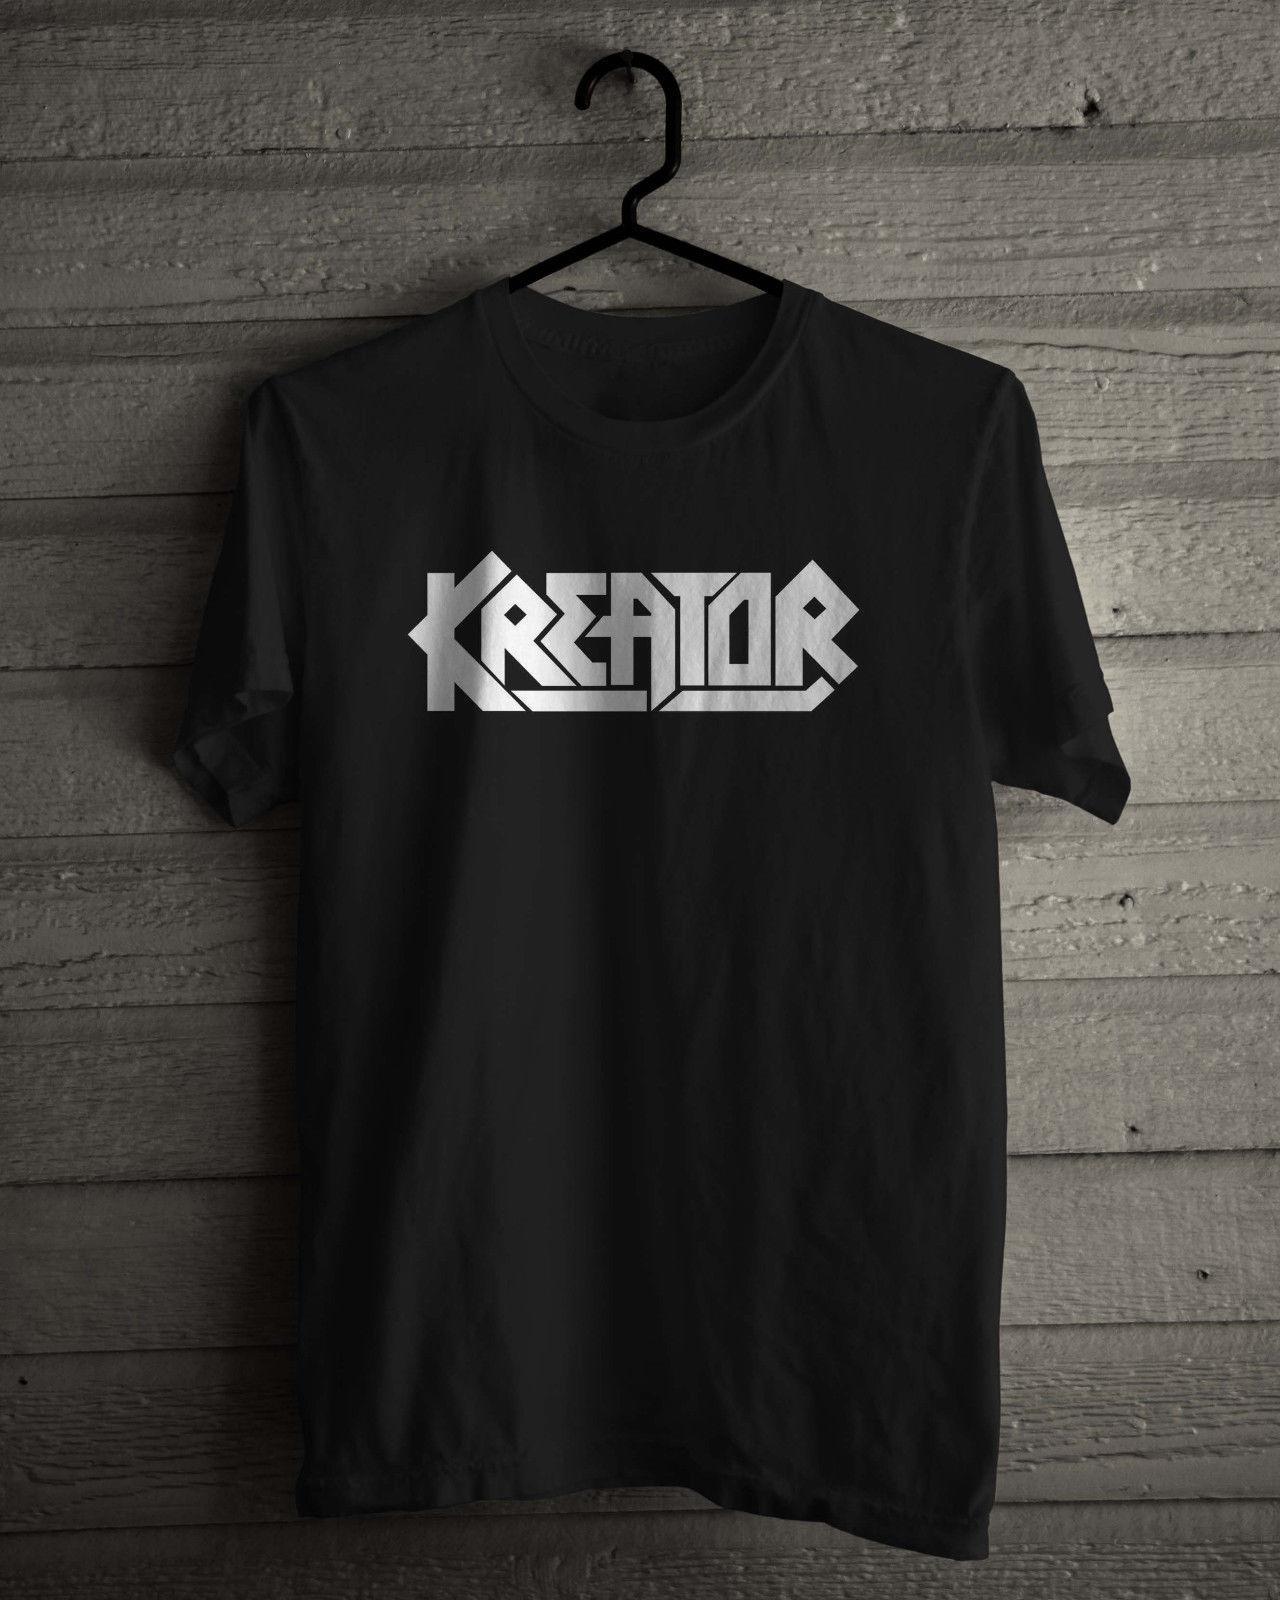 German Clothing Logo - Kreator T Shirt, Logo German Thrash Metal Band Destruction And Sodom ...